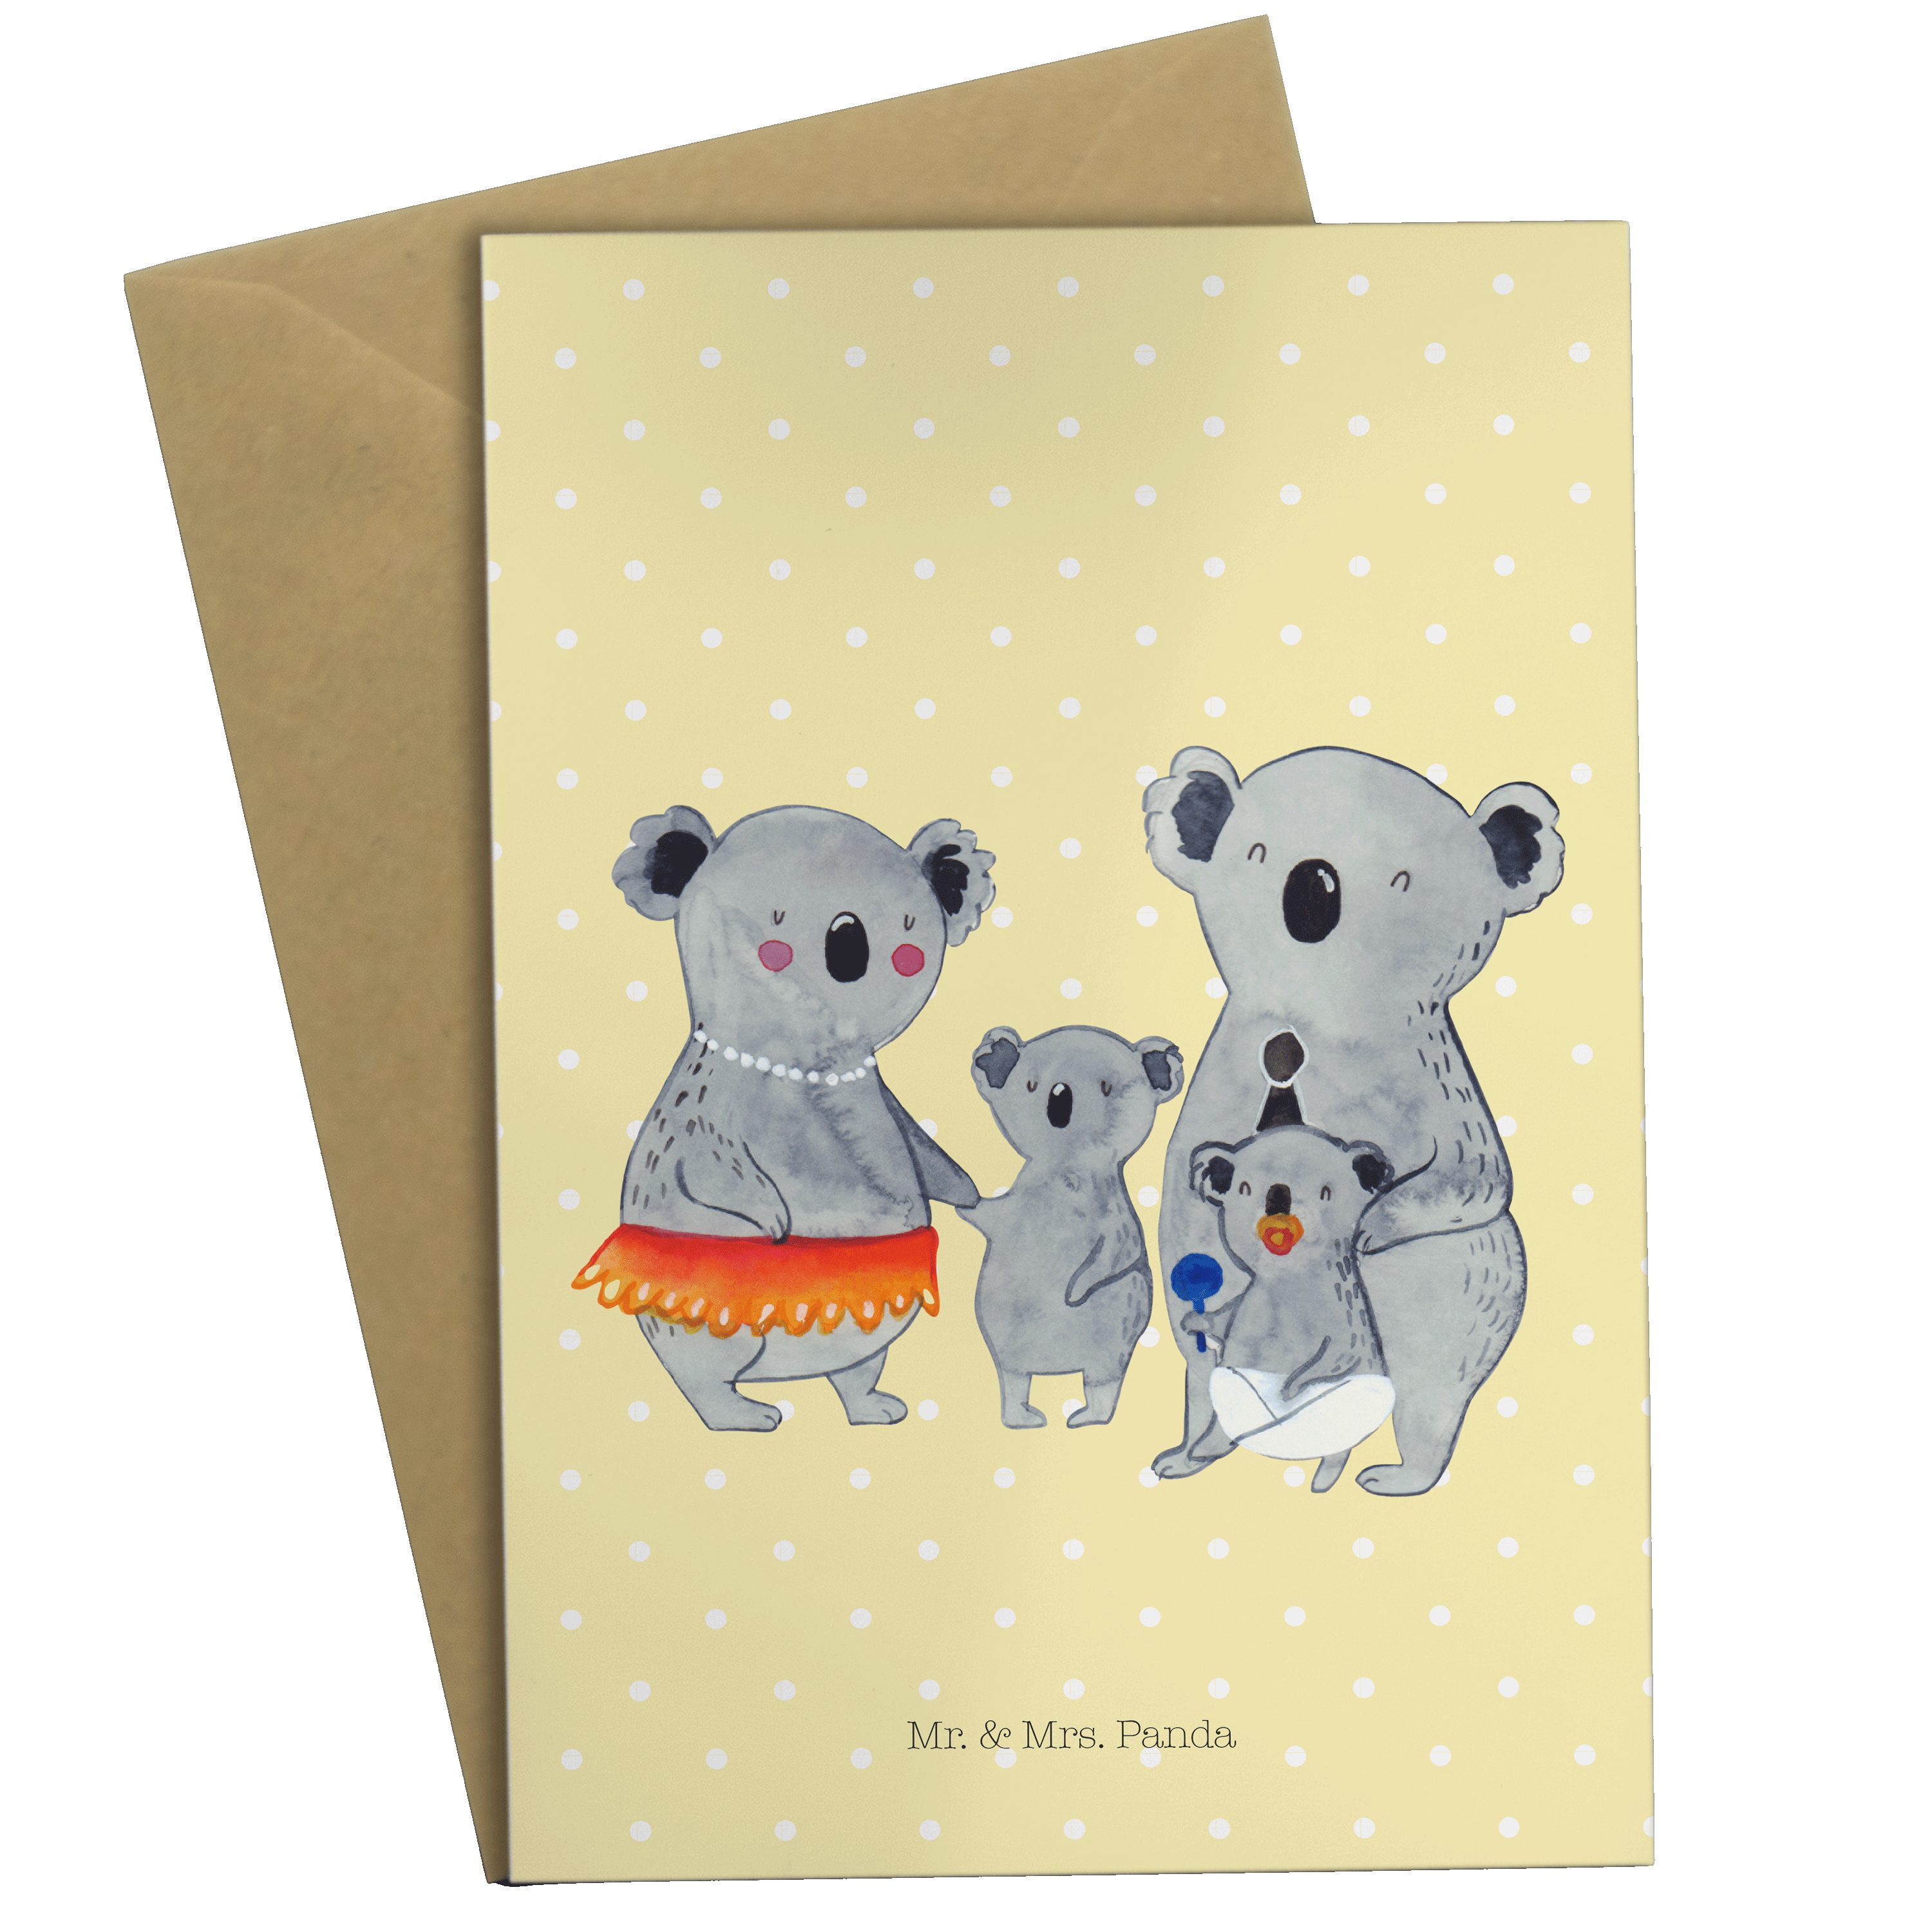 Mr. & Mrs. Panda Grußkarte Koala Familie - Gelb Pastell - Geschenk, Einladungskarte, quality tim